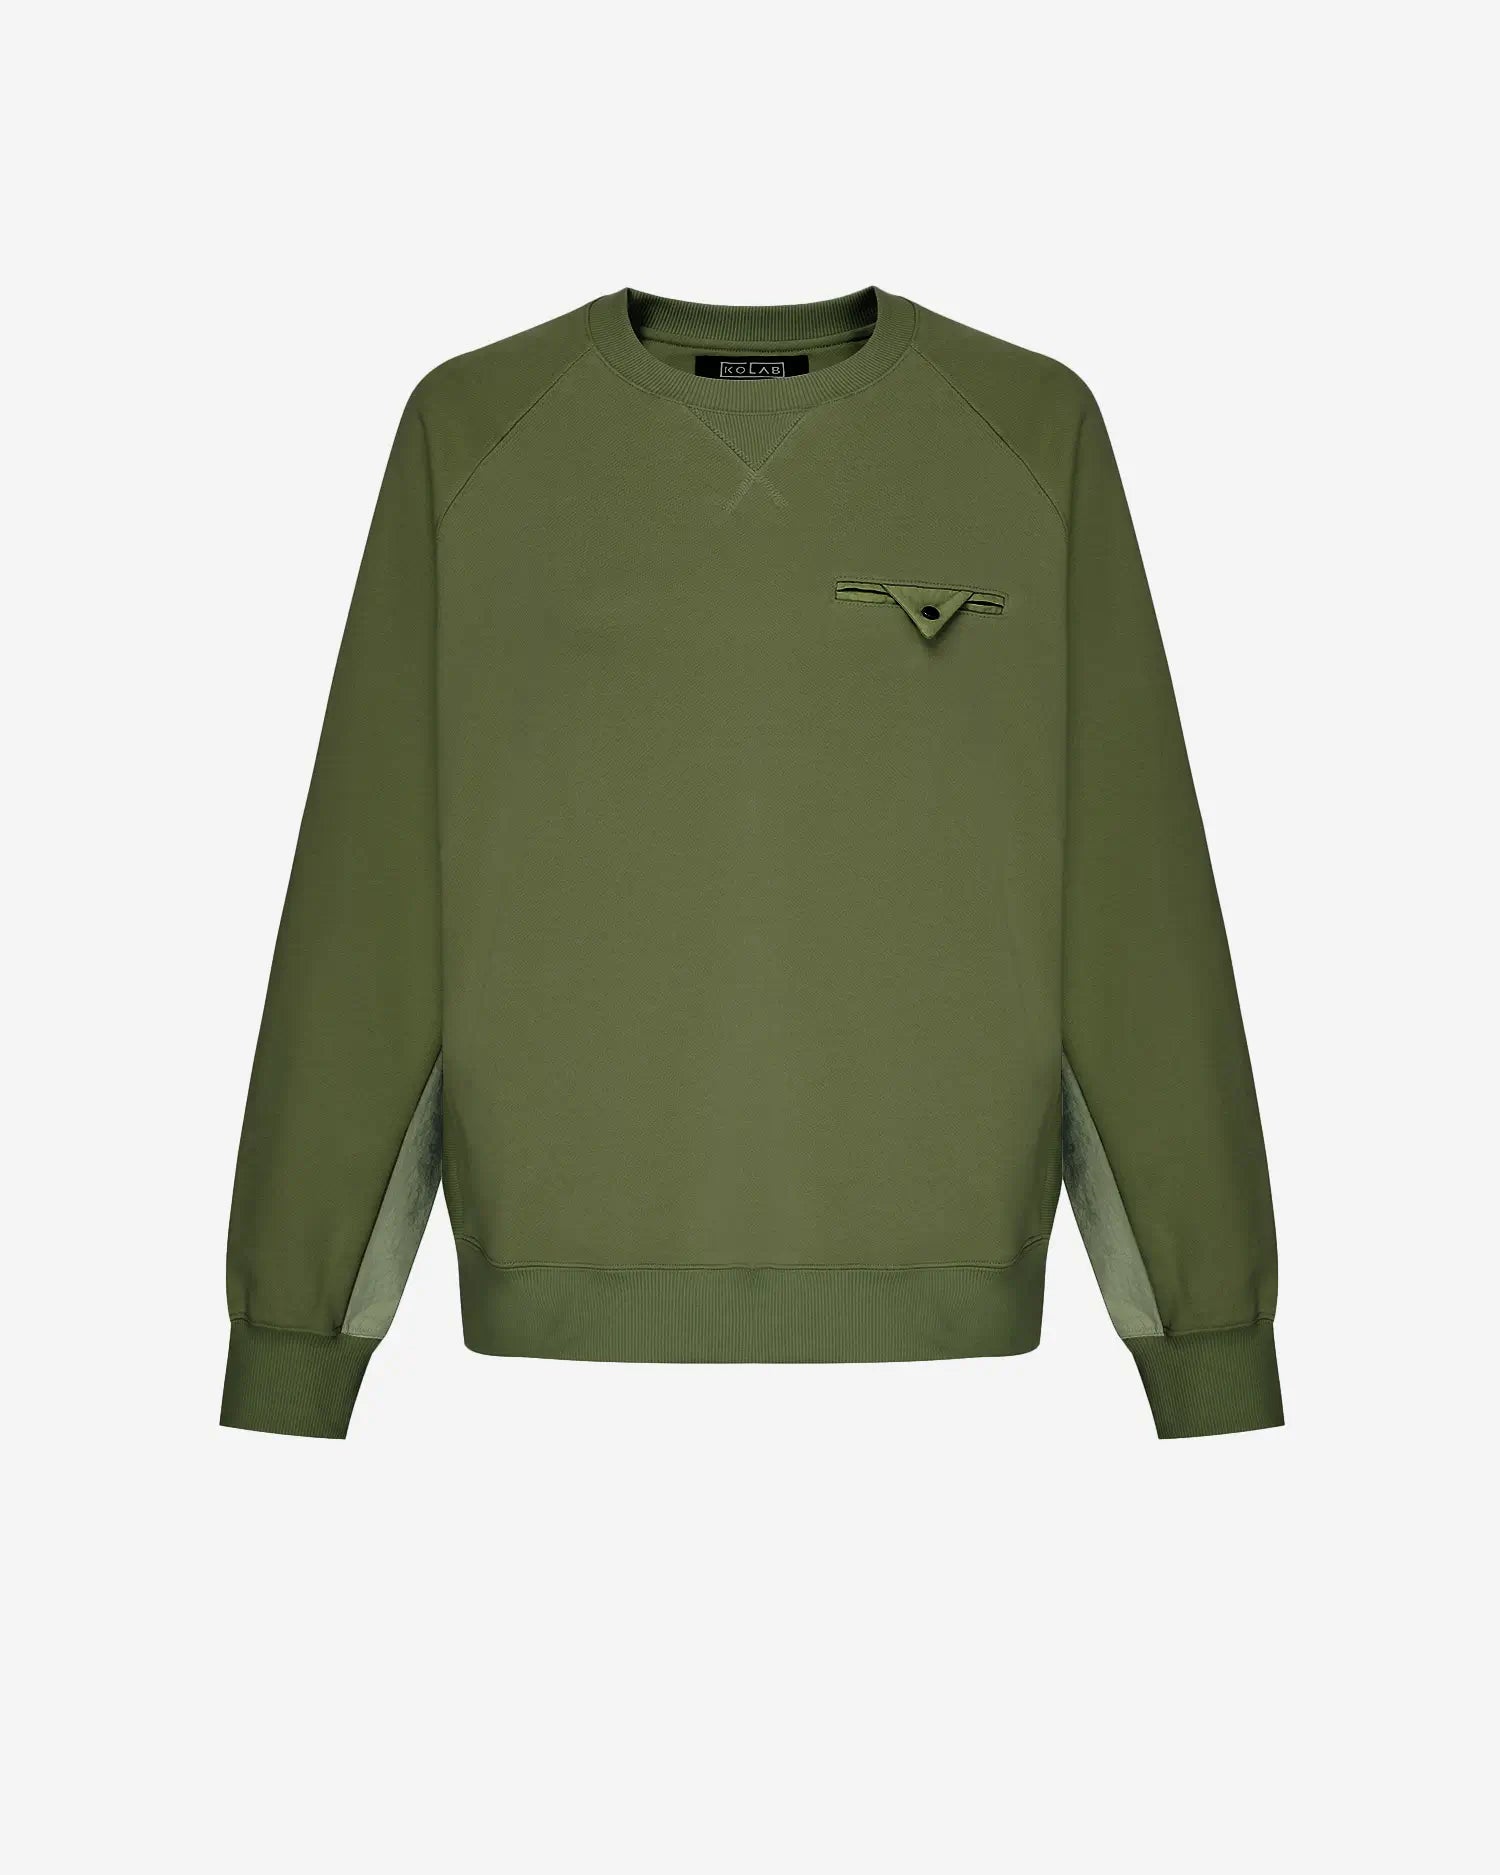 Men's Mixed Fabric Crew Sweatshirt in Military Green 01 #military-green